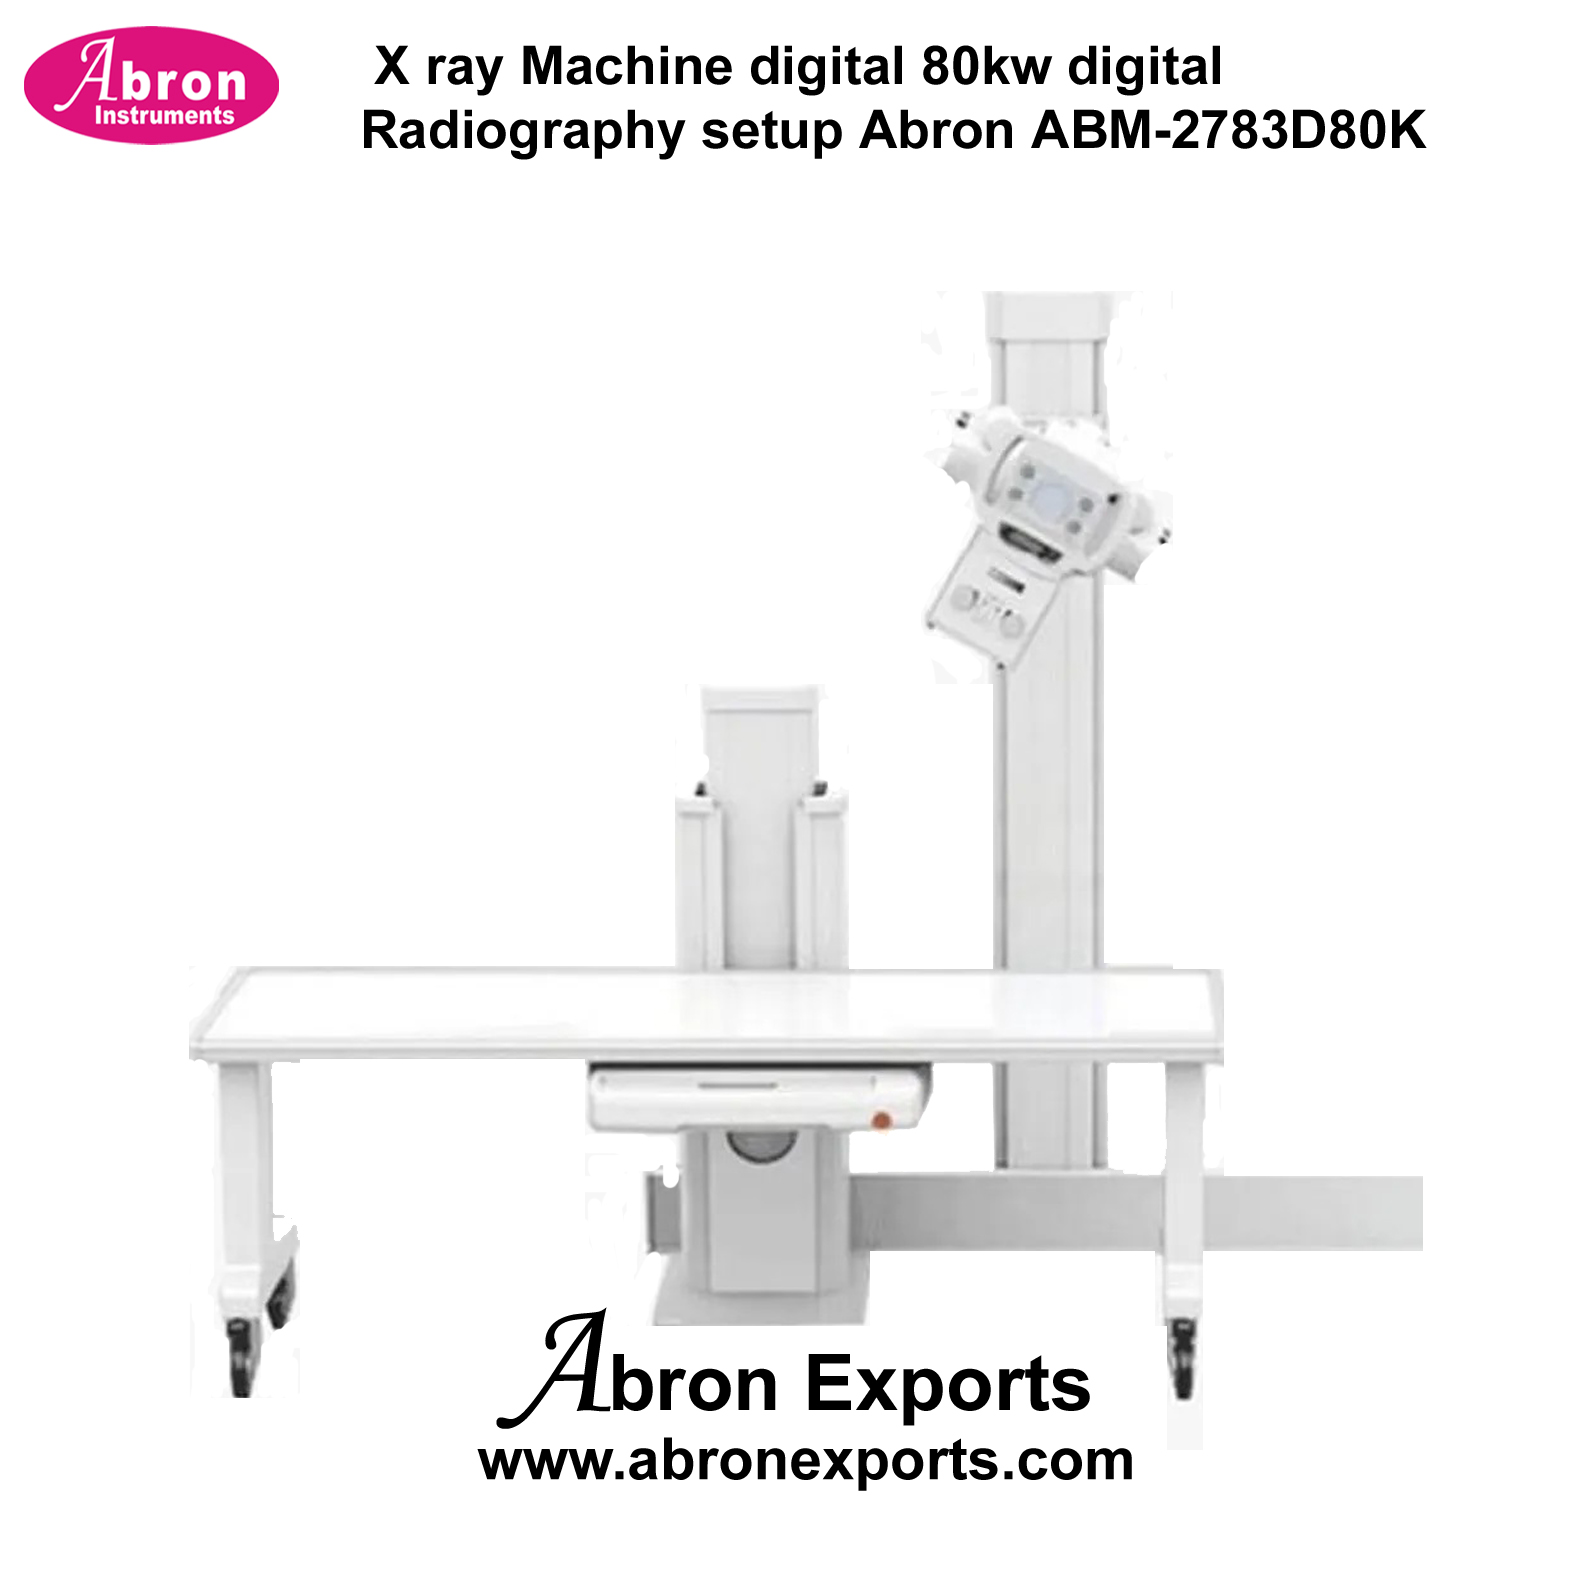 X Ray Machine Digital 80kw Digital Radiography Setup Abron ABM-2783D80K 